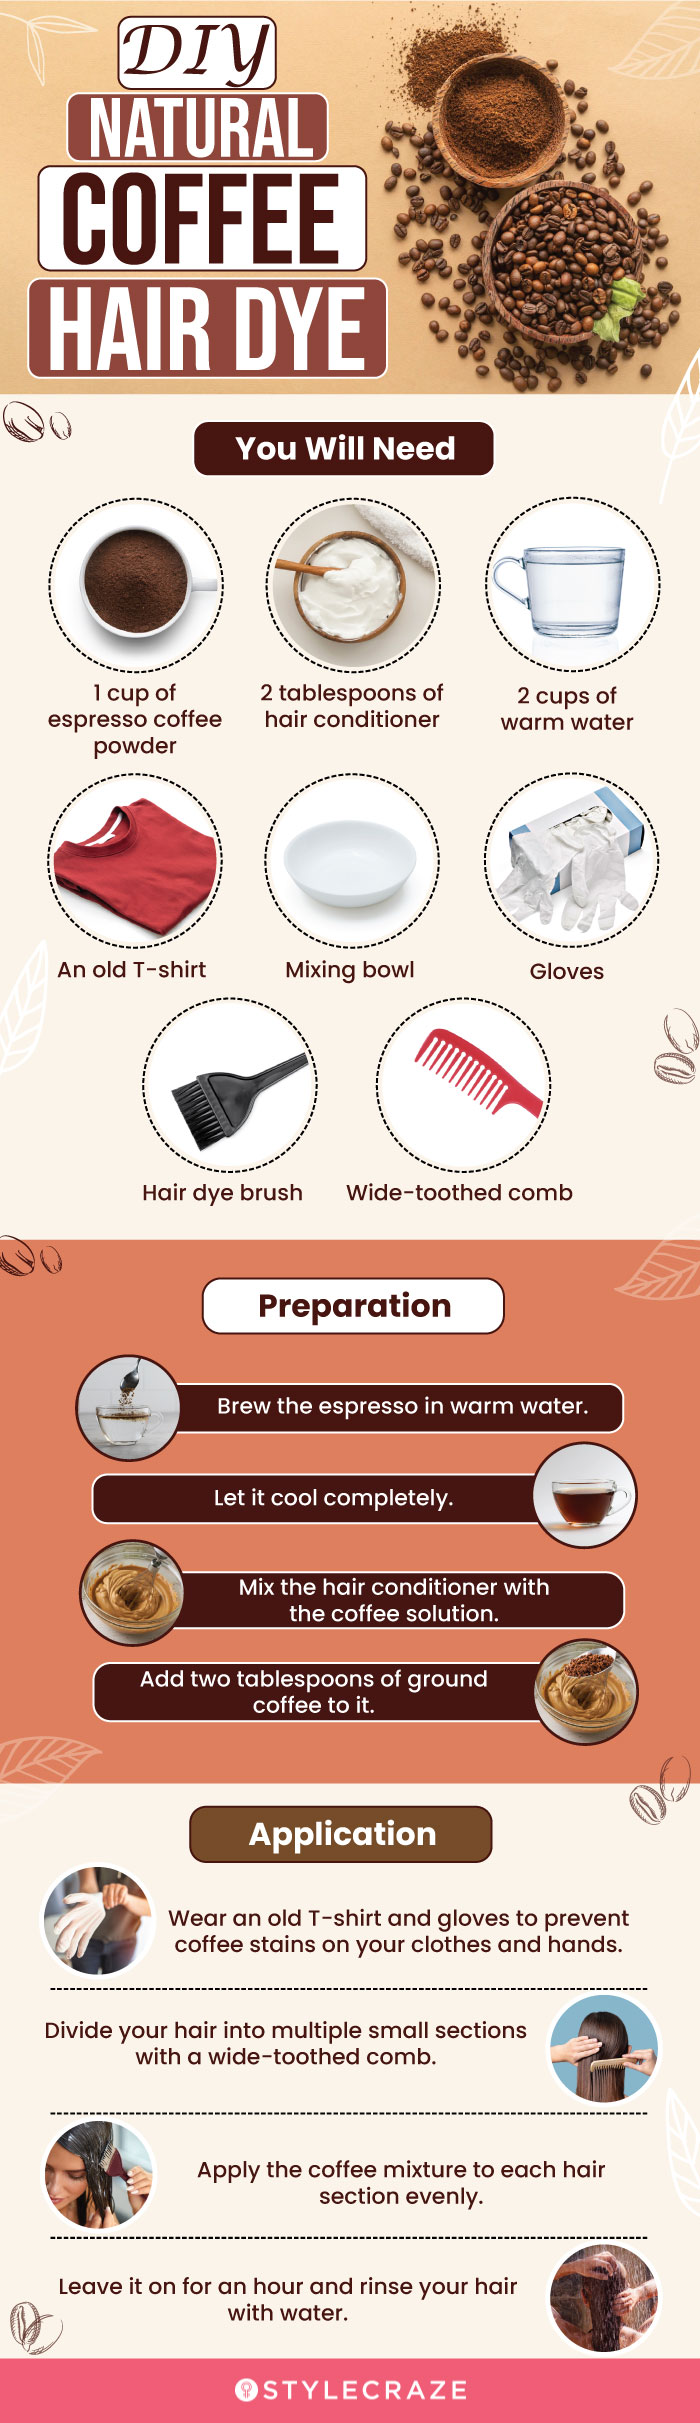 diy natural coffee hair dye (infographic)